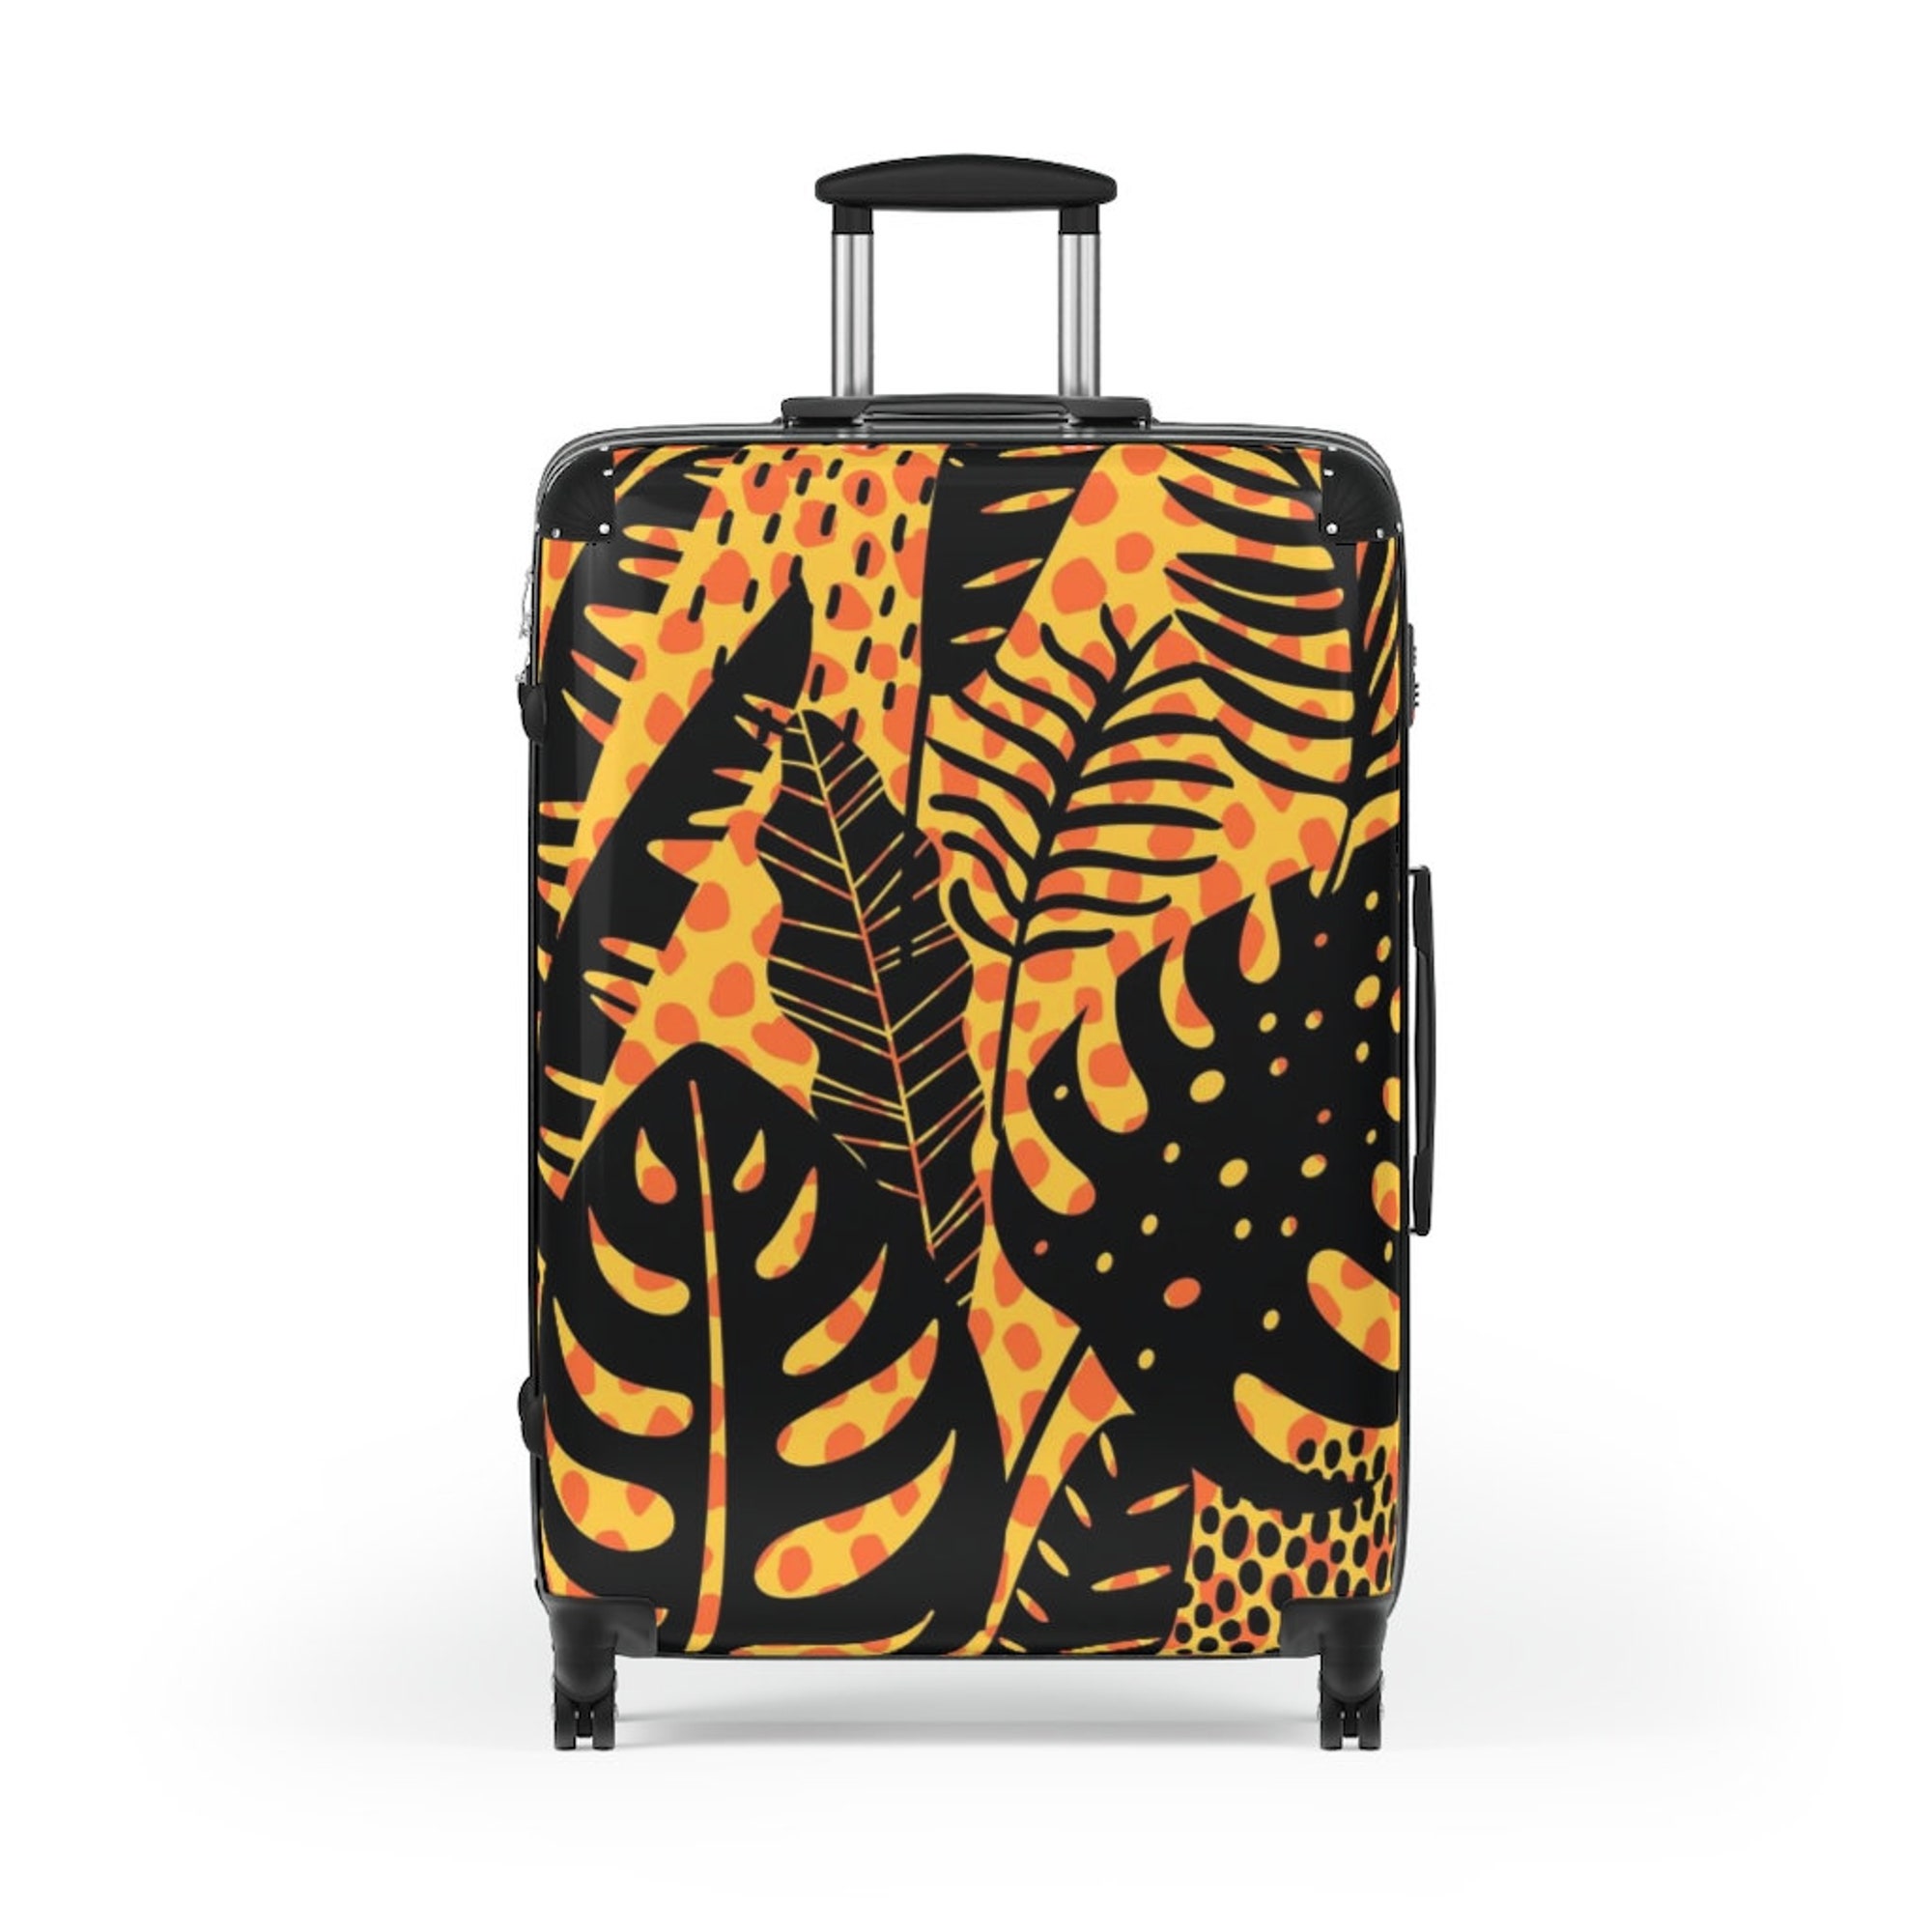 The Wild Jungle Suitcase